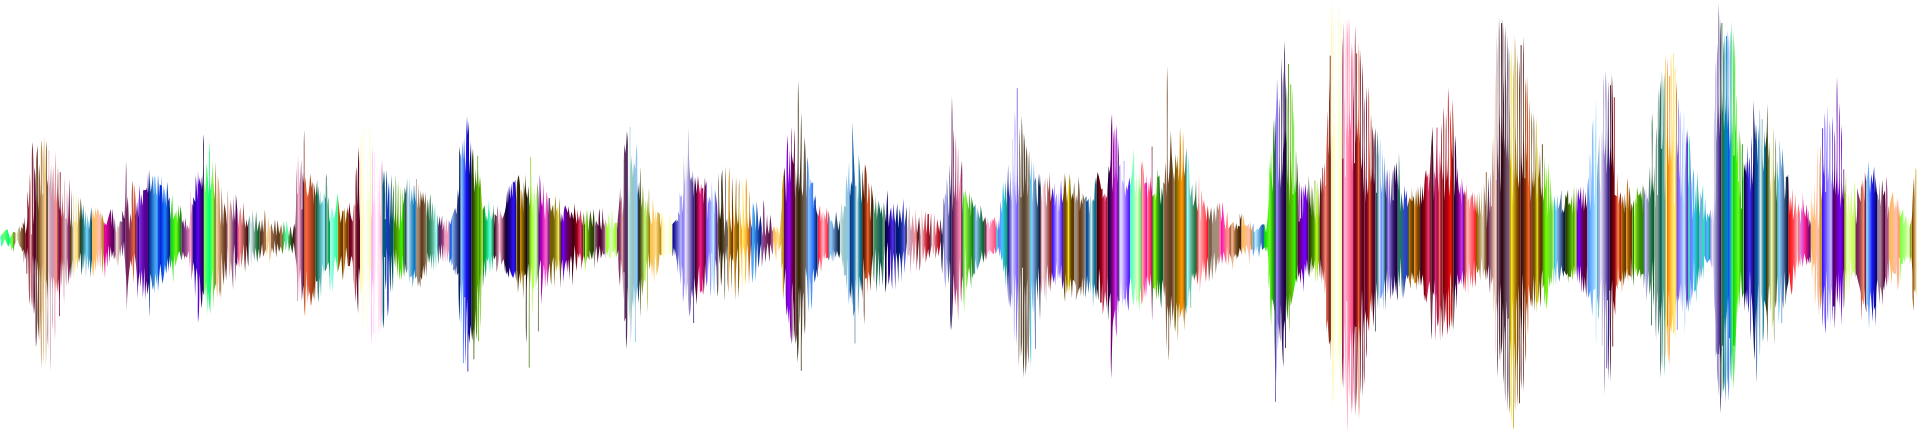 Colorful Audio Waveform